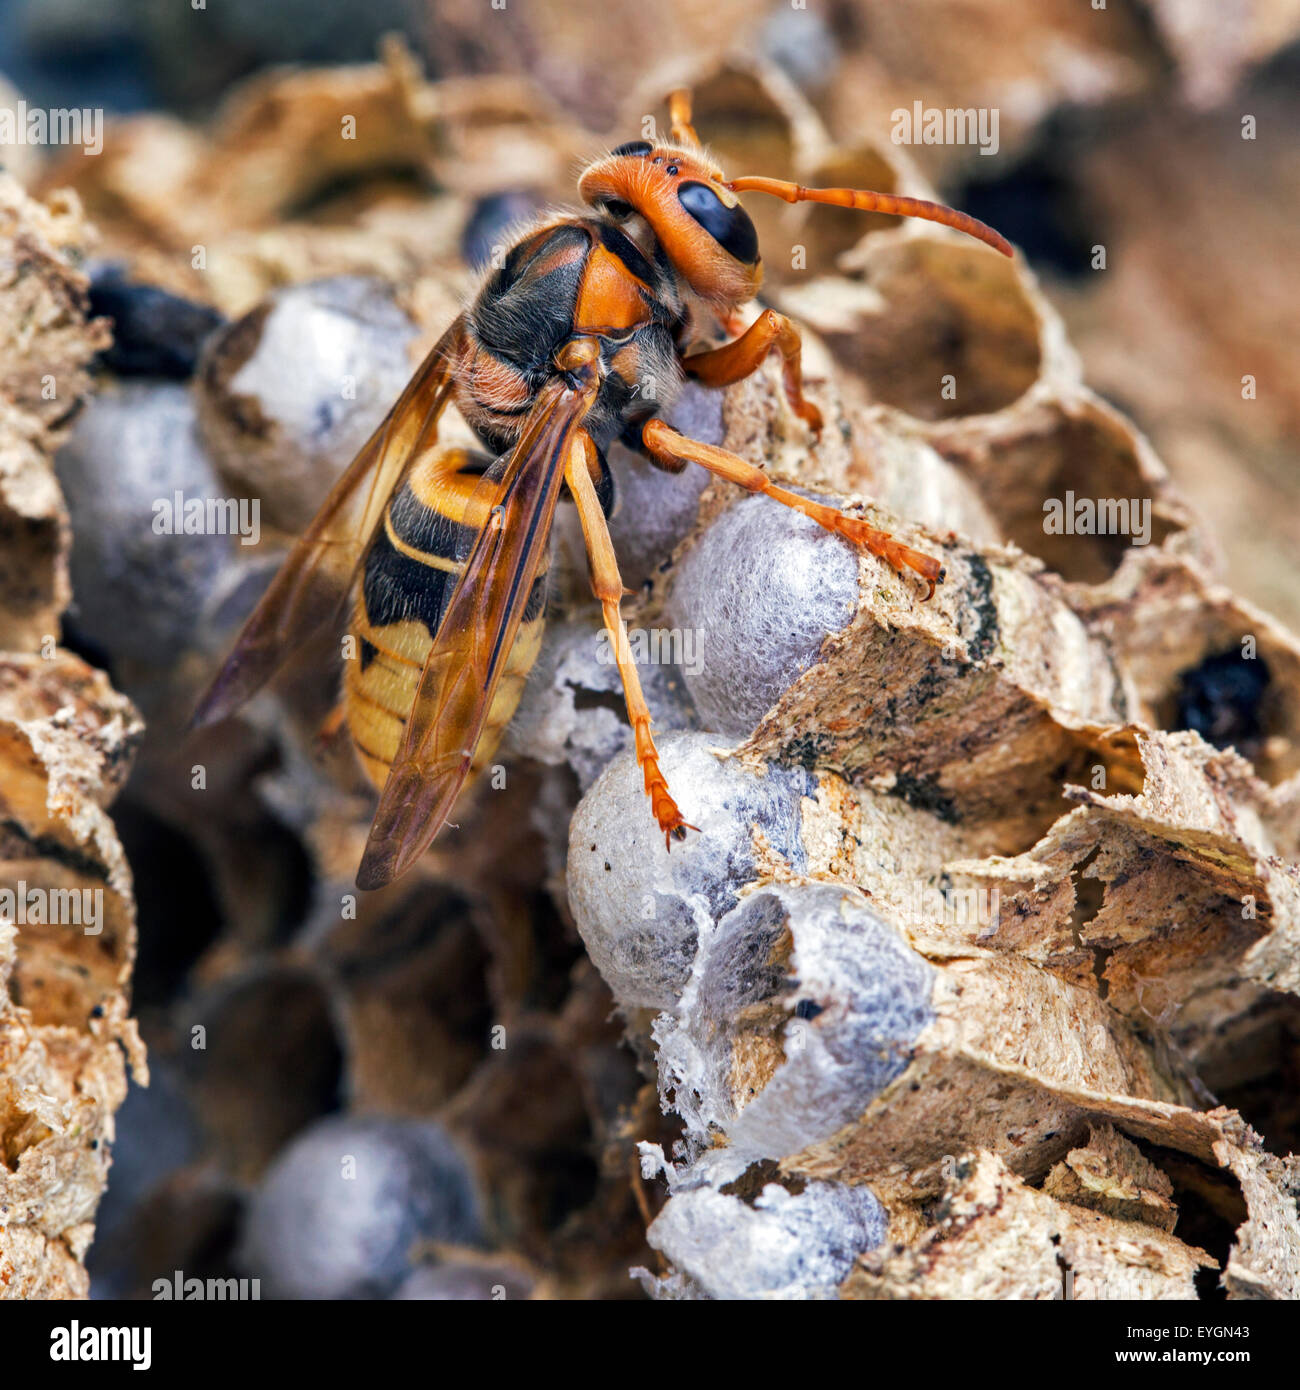 European hornet (Vespa crabro) on brood cells in paper nest Stock Photo